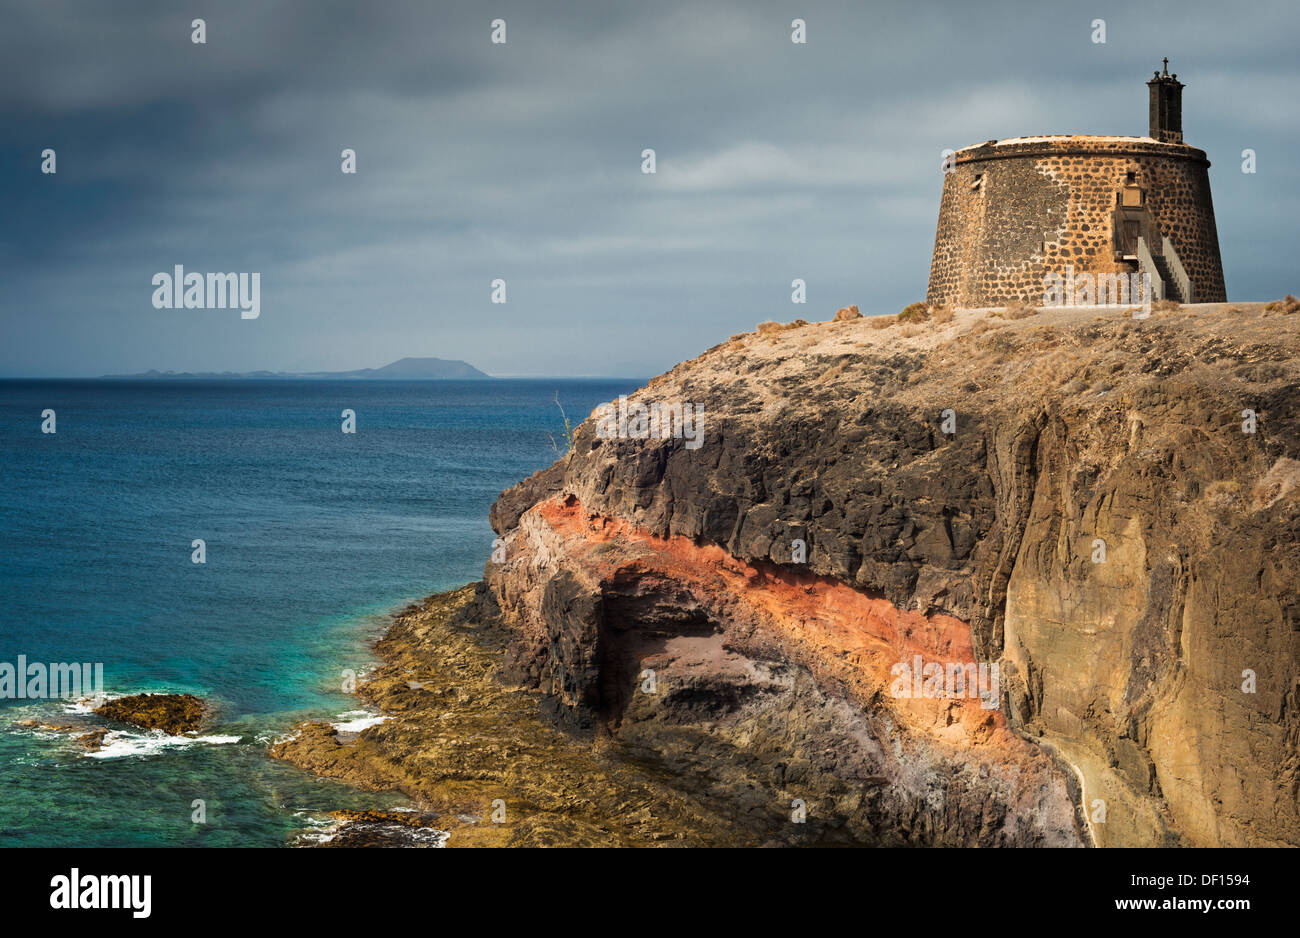 Castillo de las Coloradas on the cliffs east of Playa Blanca, Lanzarote, with the island of Fuerteventura in the distance Stock Photo